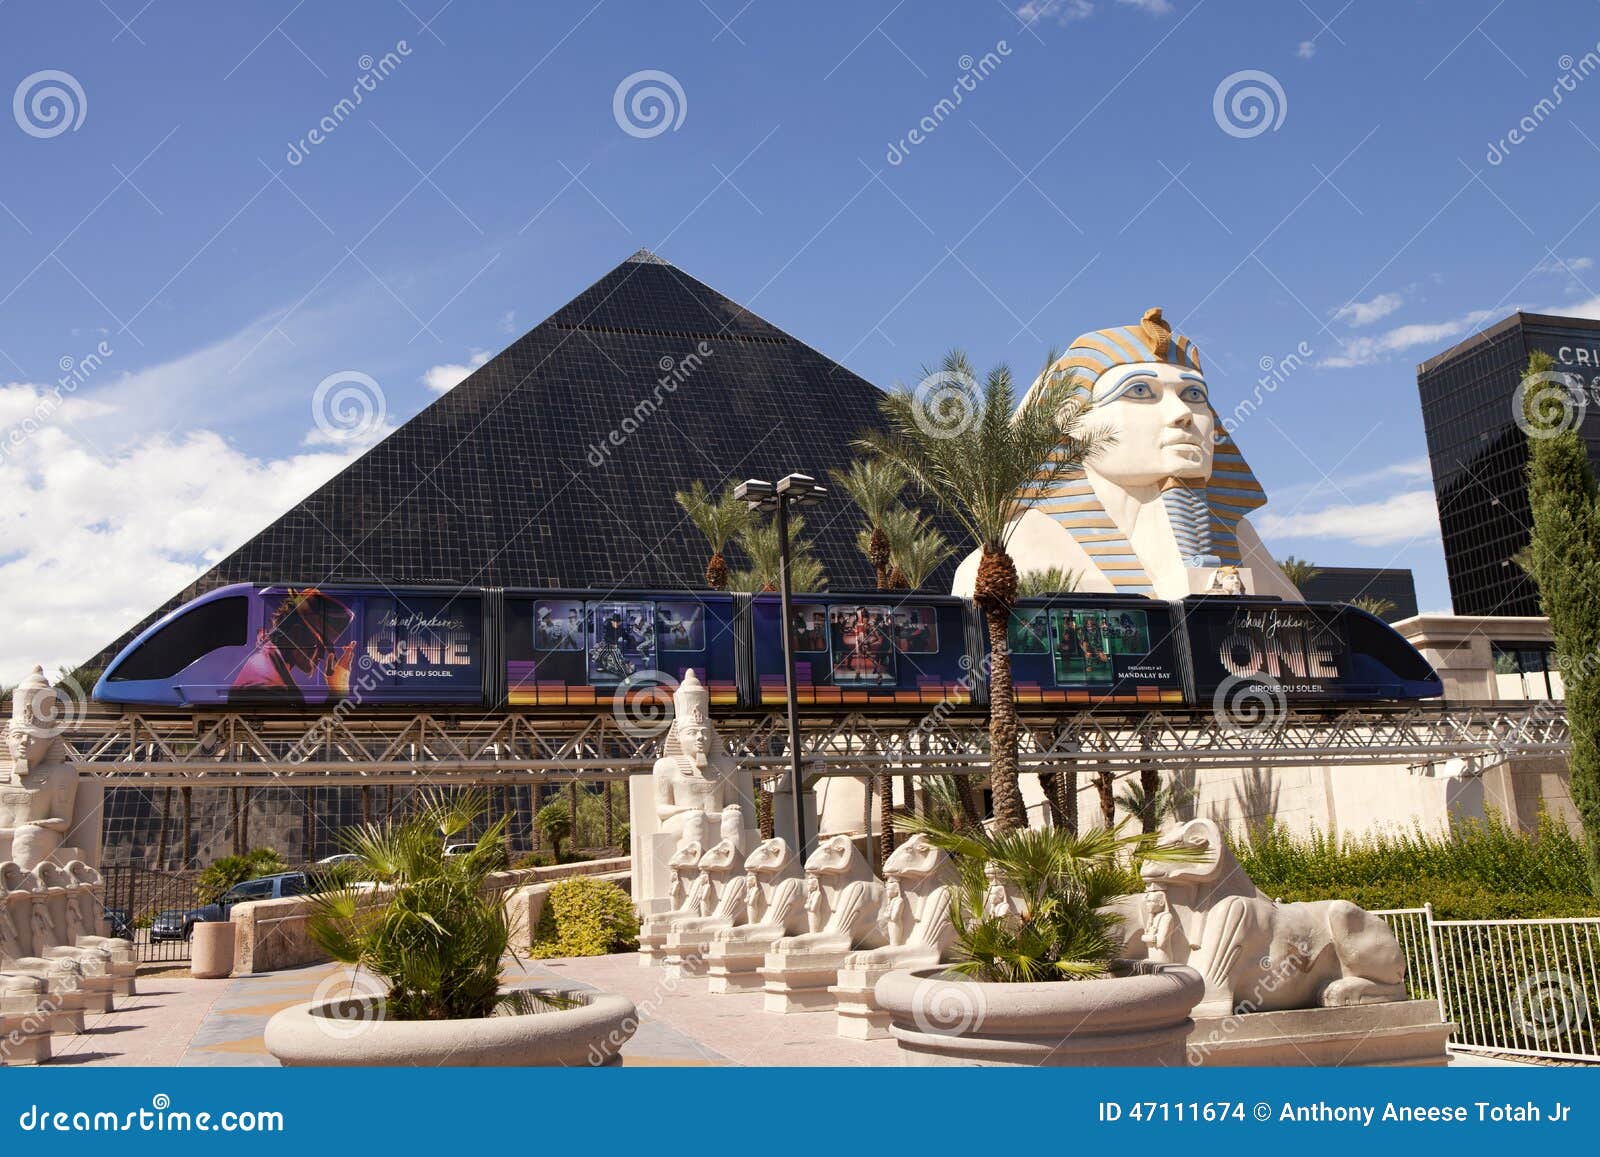 Luxor Hotel and Casino in Las Vegas, Nevada Editorial Stock Image - Image  of luxor, area: 47111674